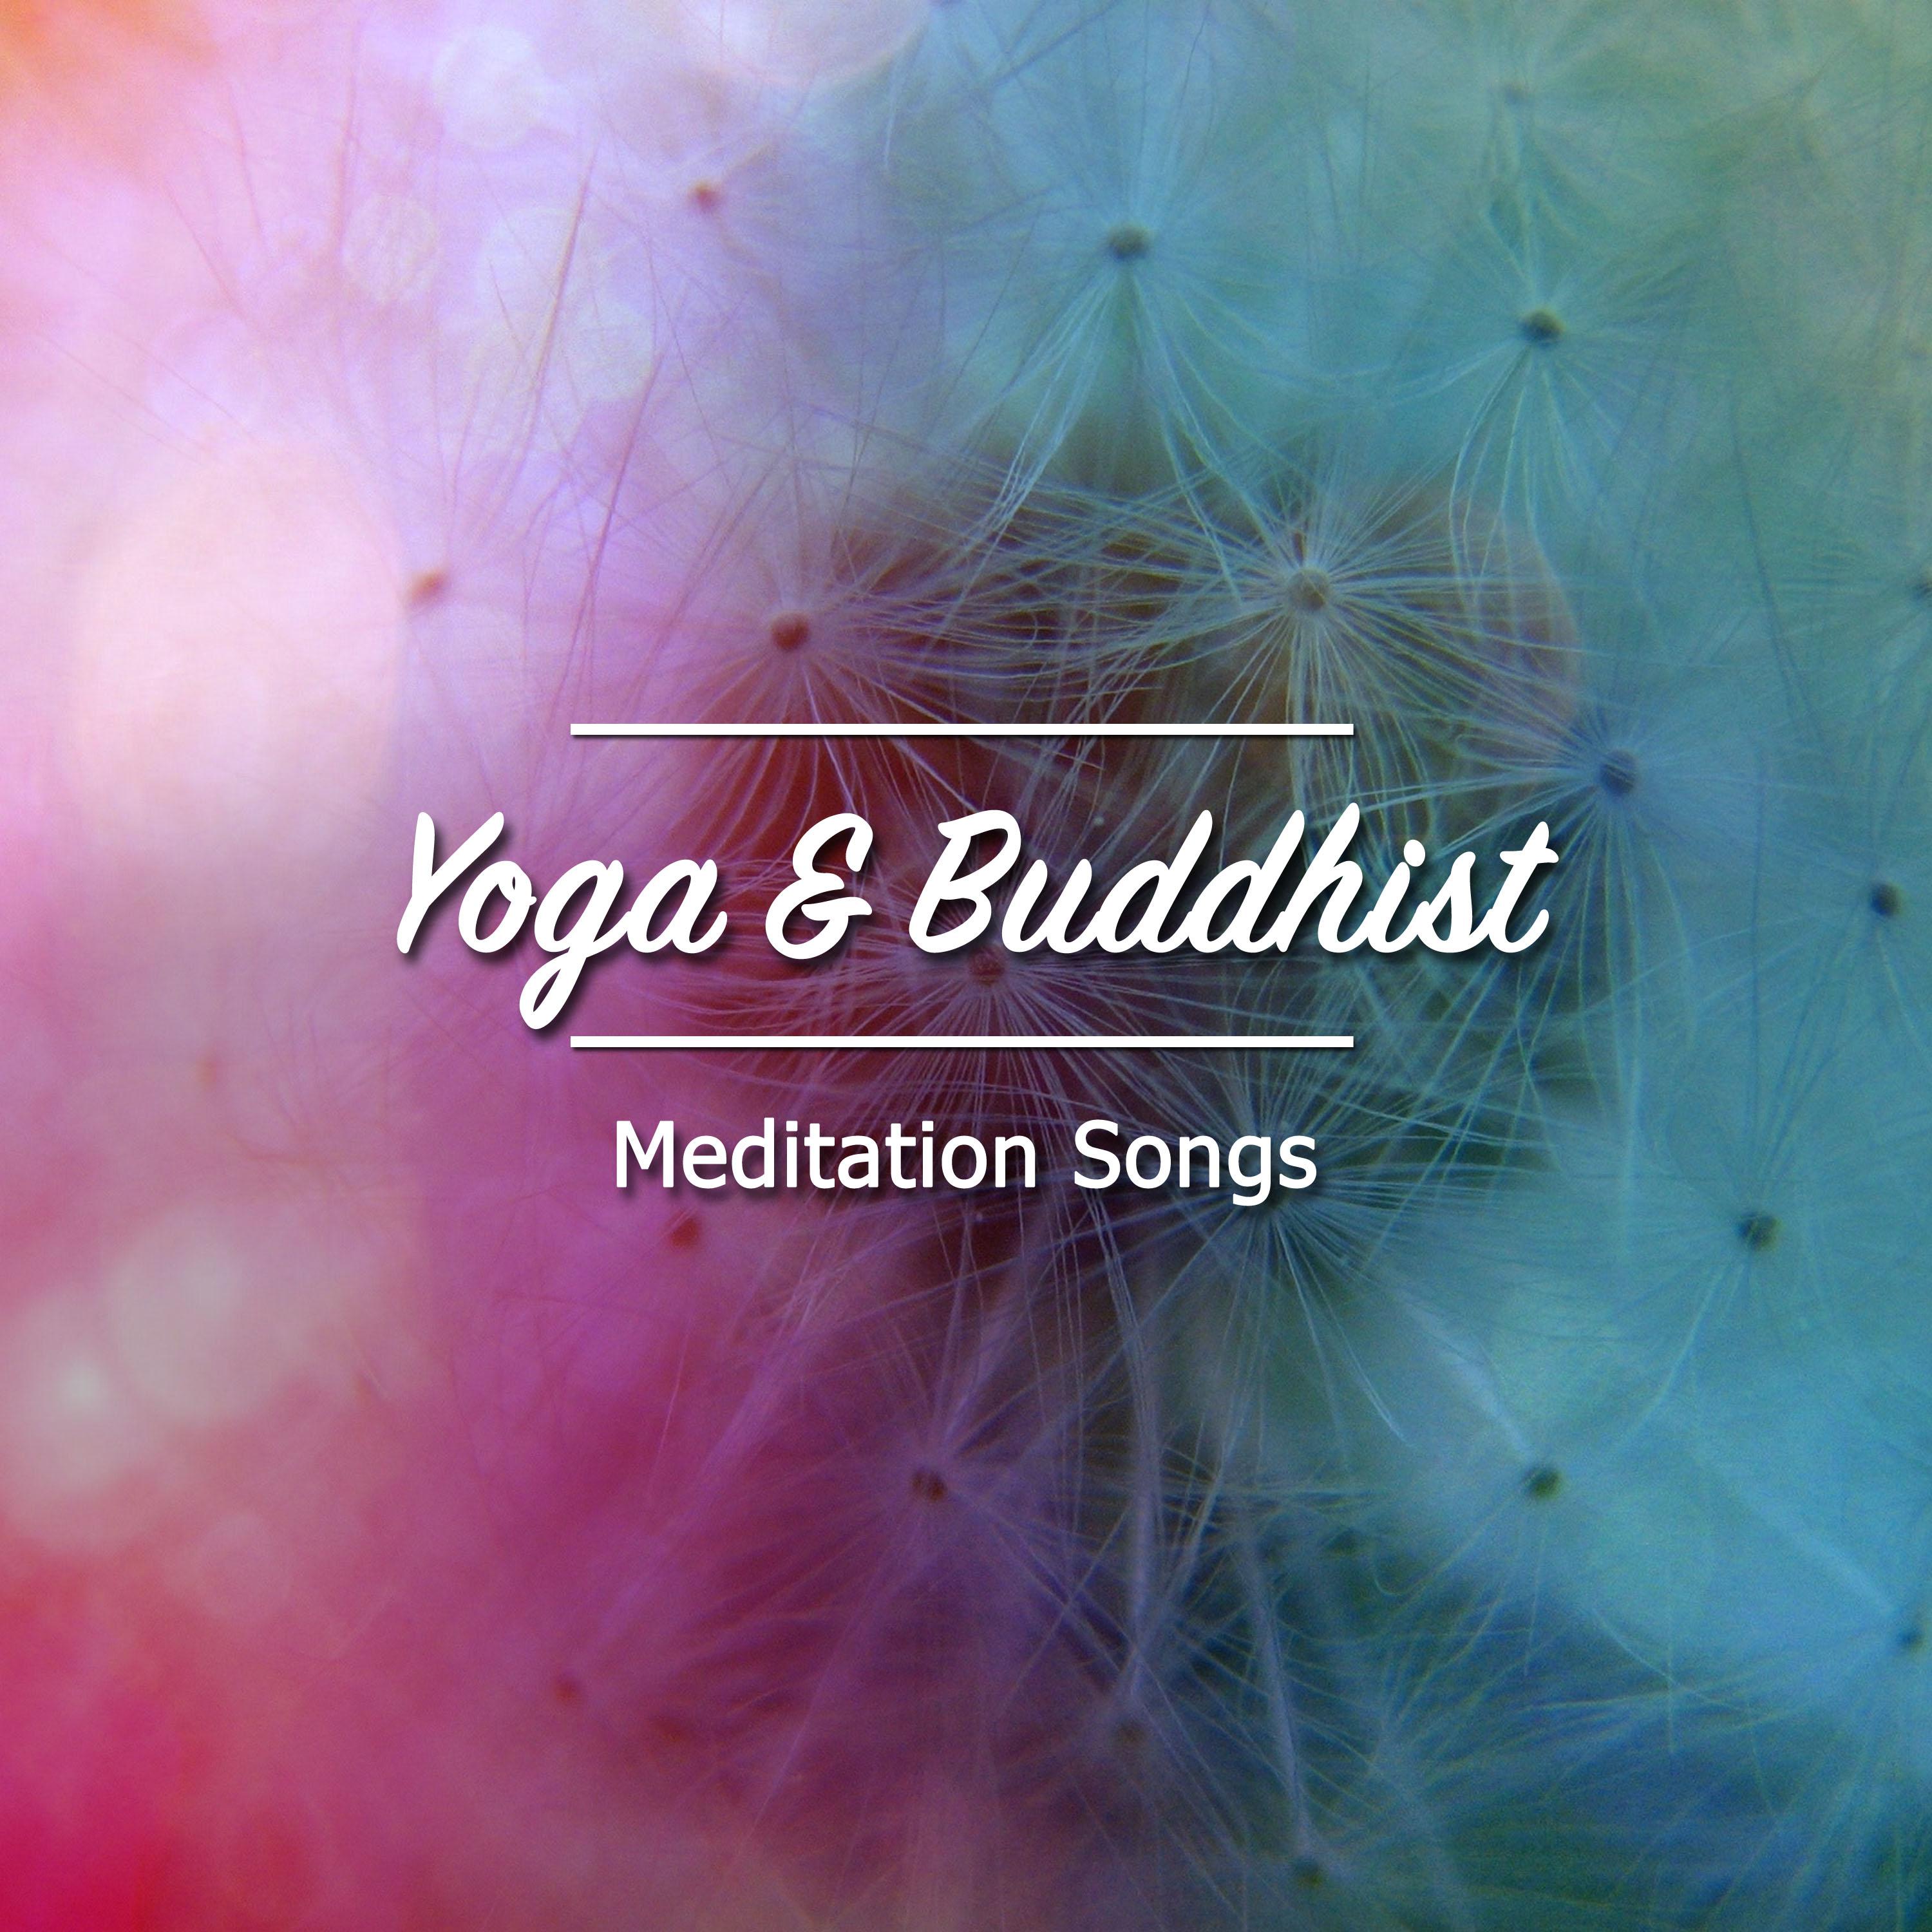 21 Yoga and Buddhist Meditation Songs